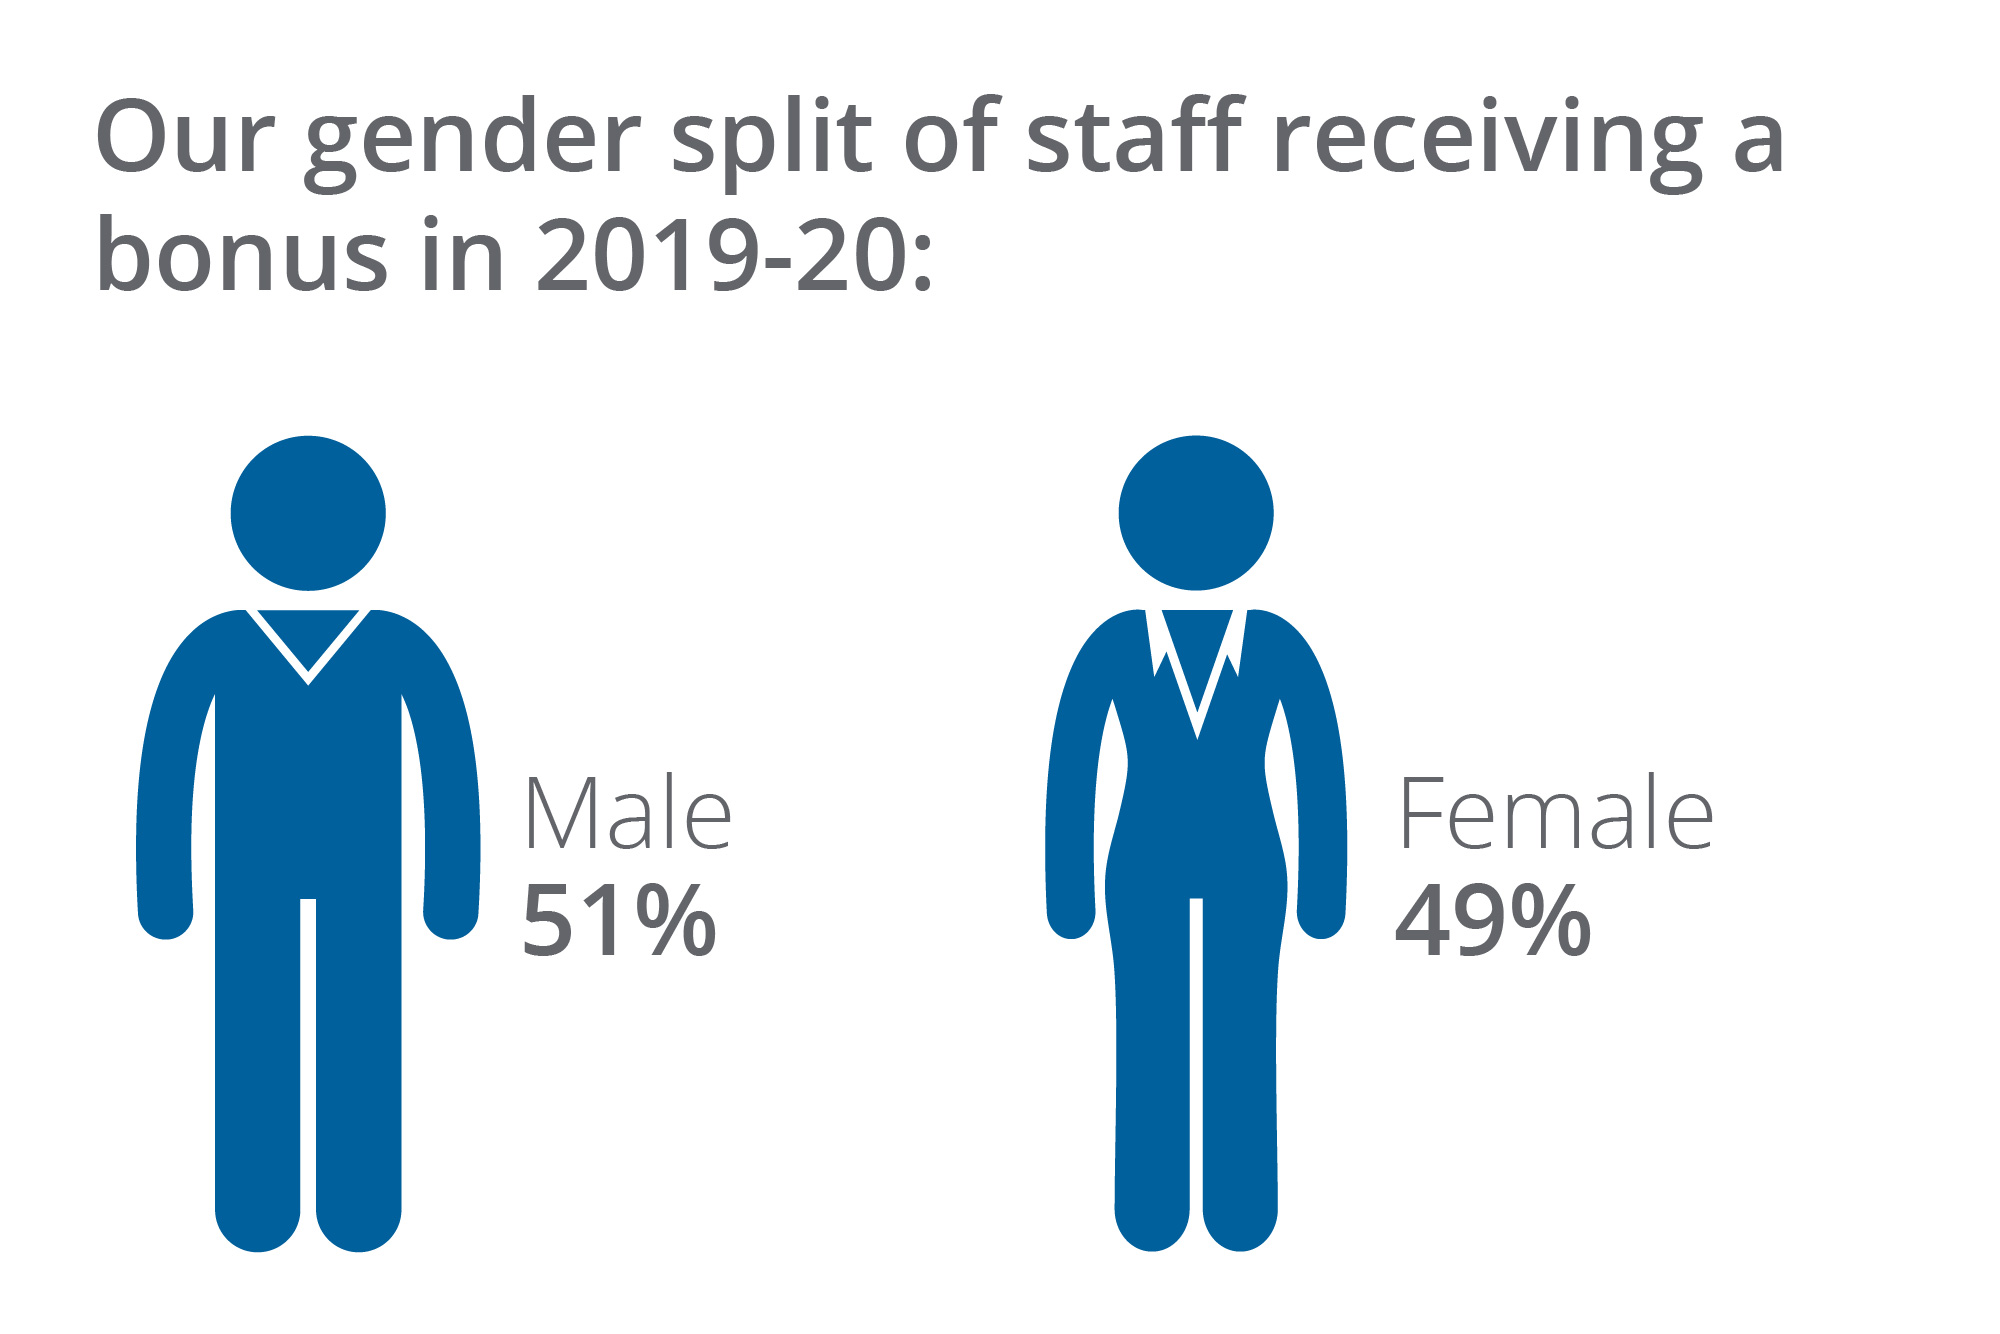 Our gender split of staff receiving a bonus in 2019-20: Male 51% Female 49%